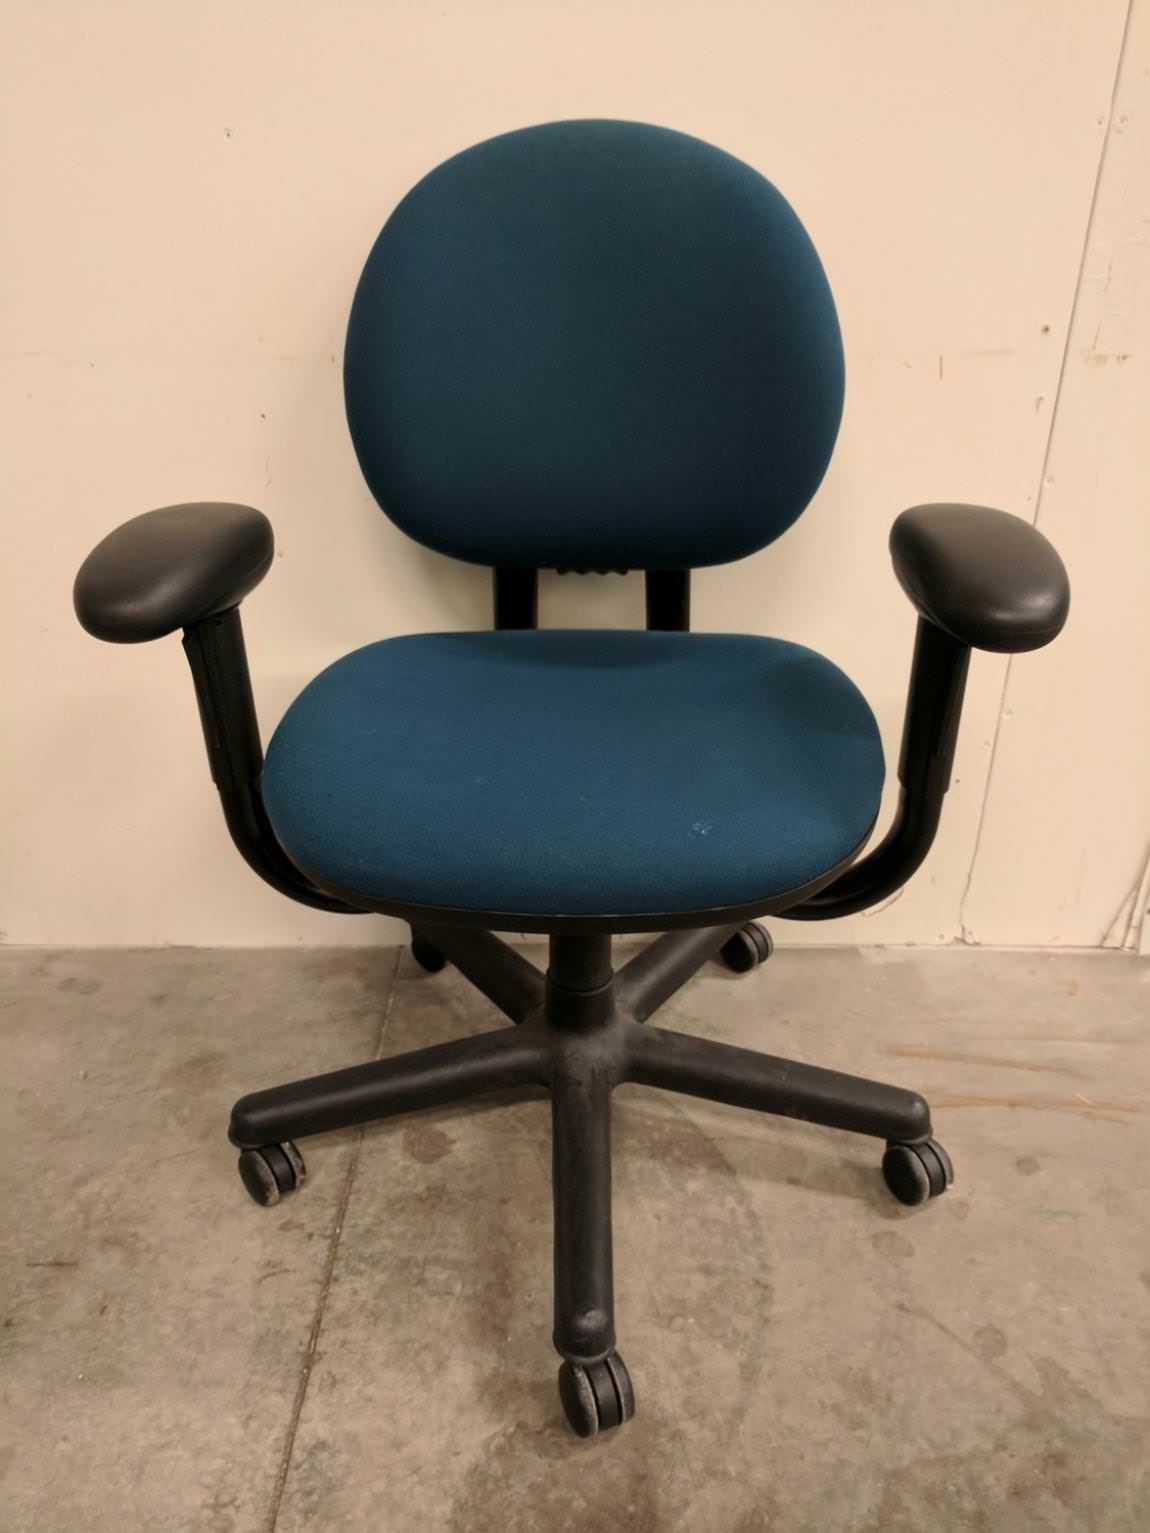 Steelcase Blue Low-Back Rolling Office Chair : Steelcase